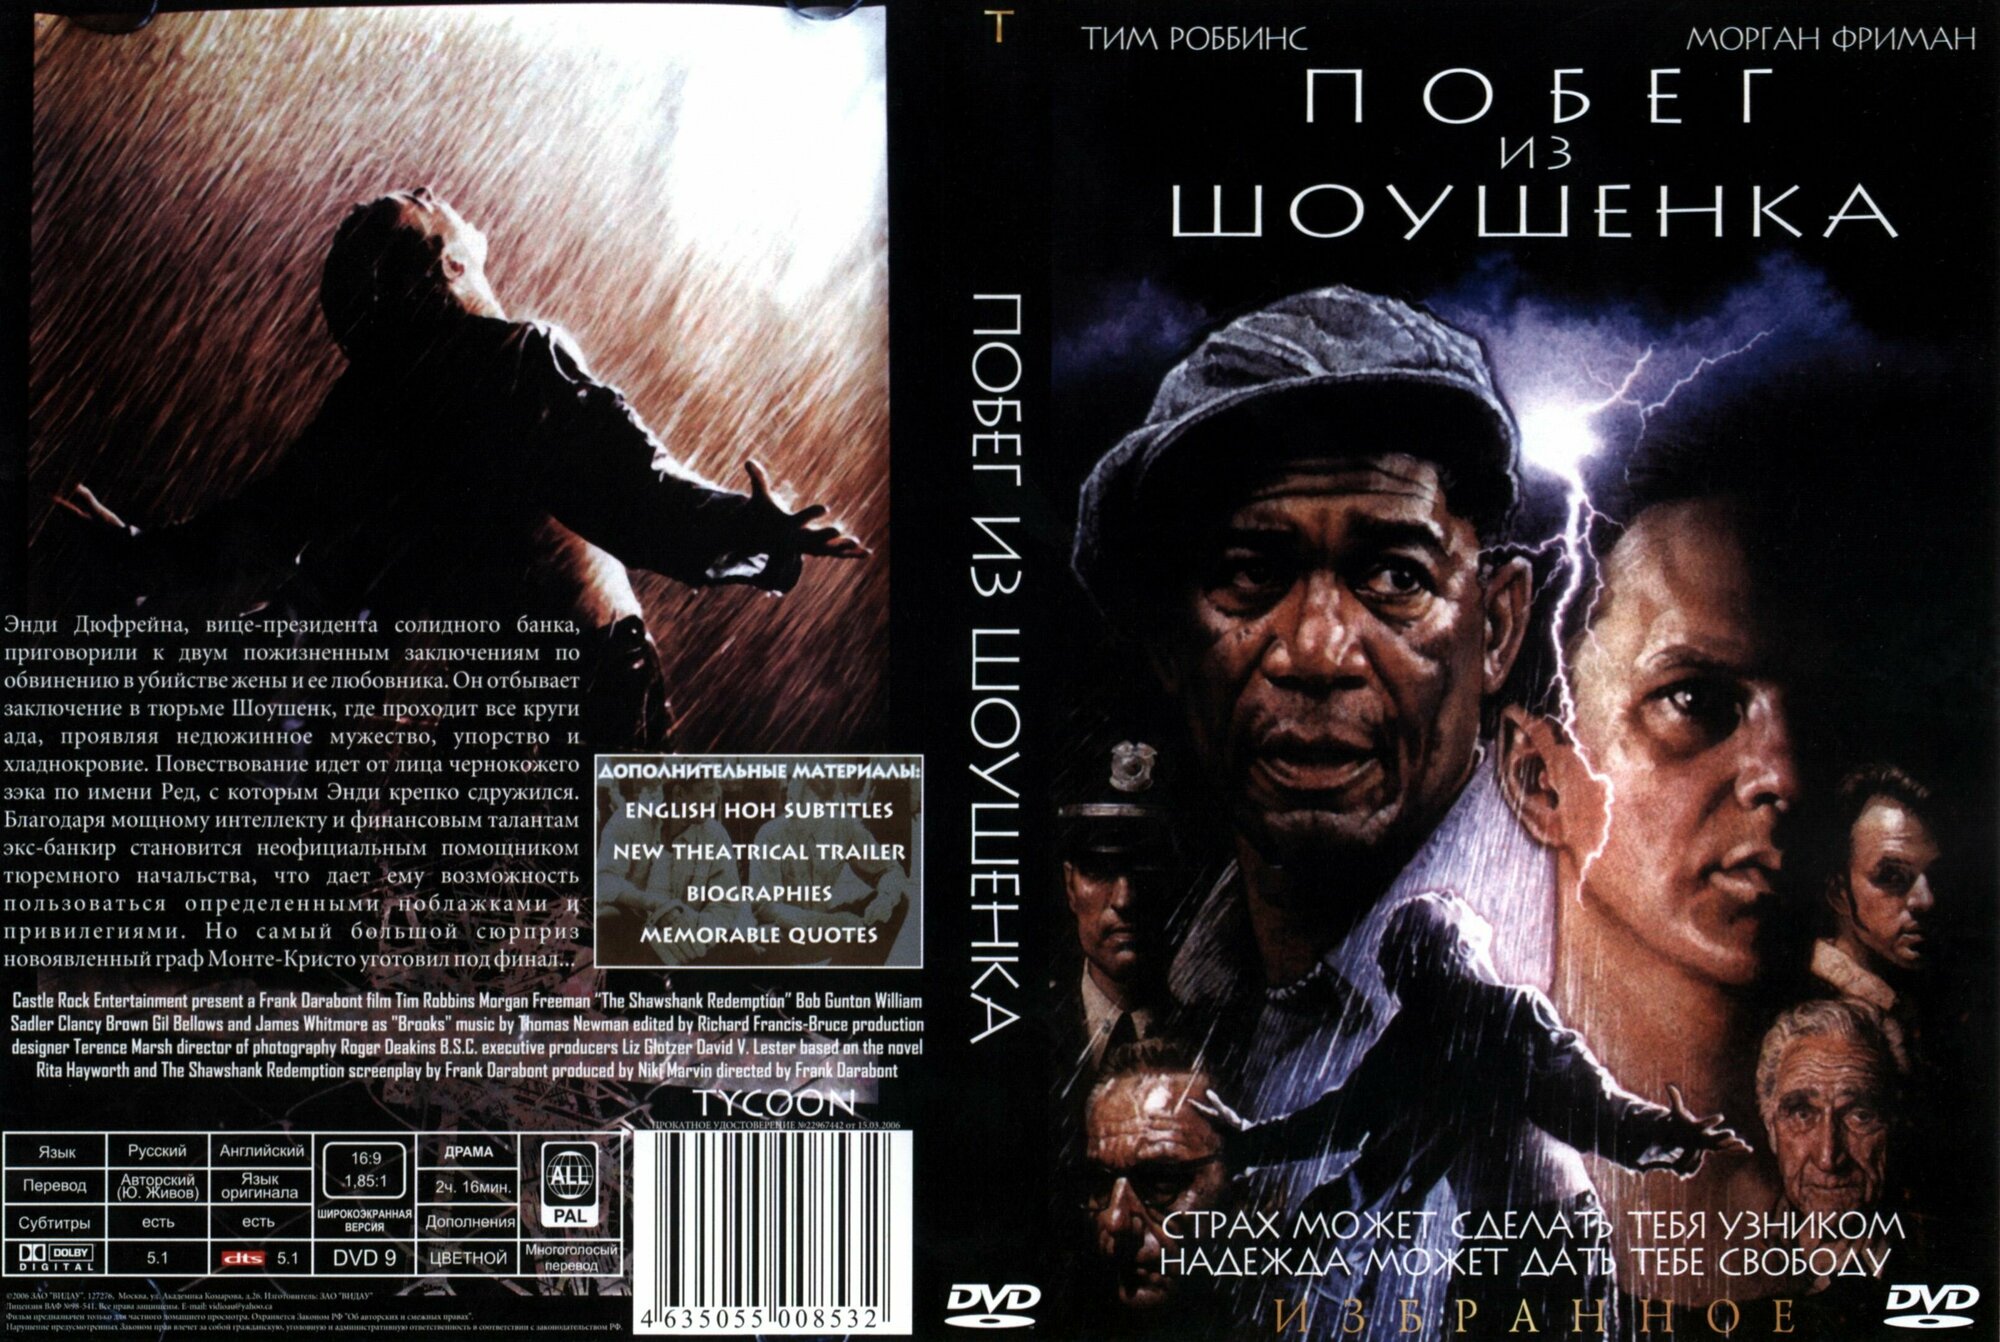 Фильм "Побег из Шоушенка" 1994г. DVD